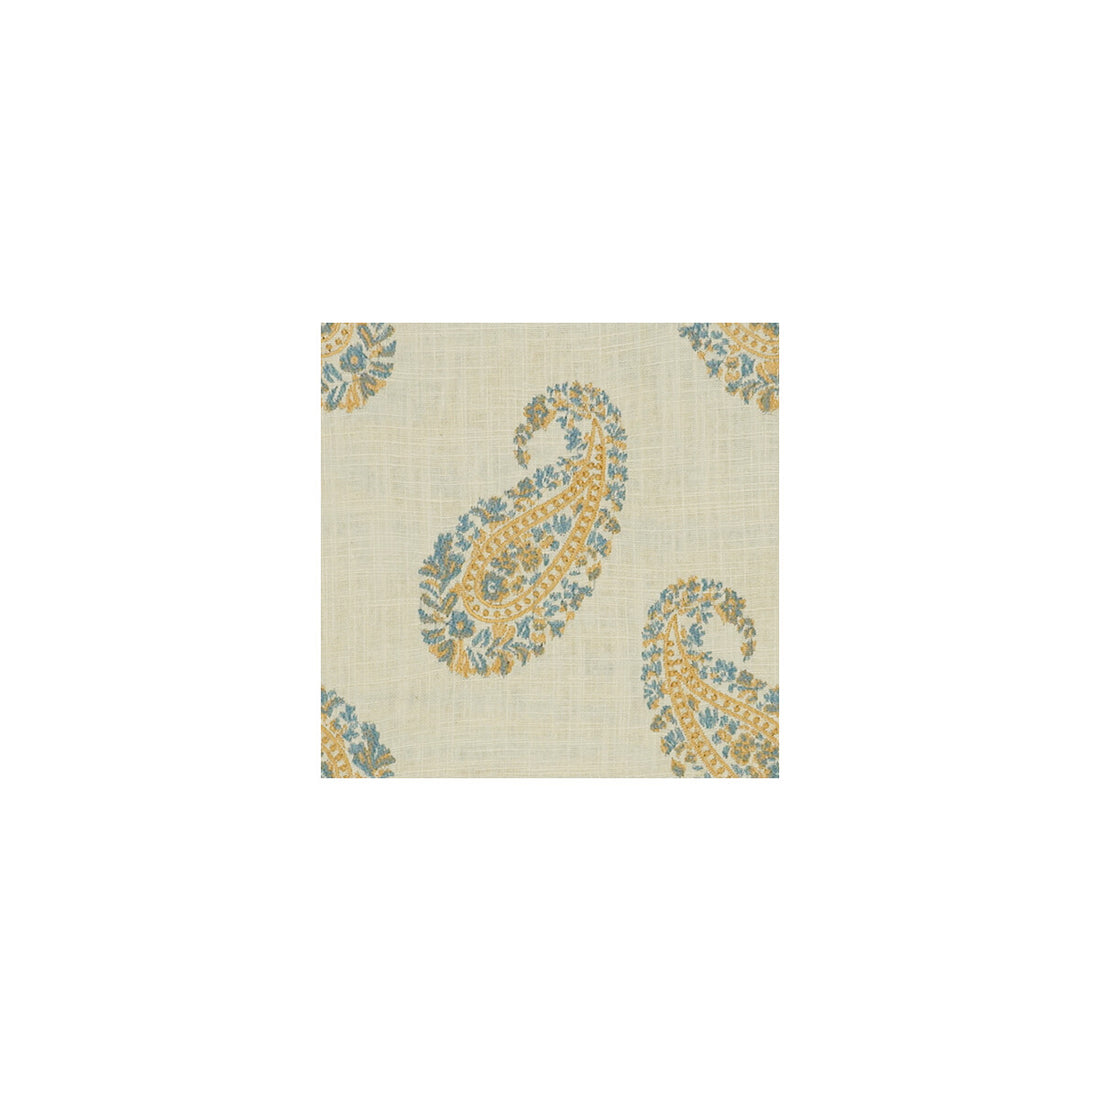 Kravet Basics fabric in sallie-federal color - pattern SALLIE.FEDERAL.0 - by Kravet Basics in the Pierre Deux collection